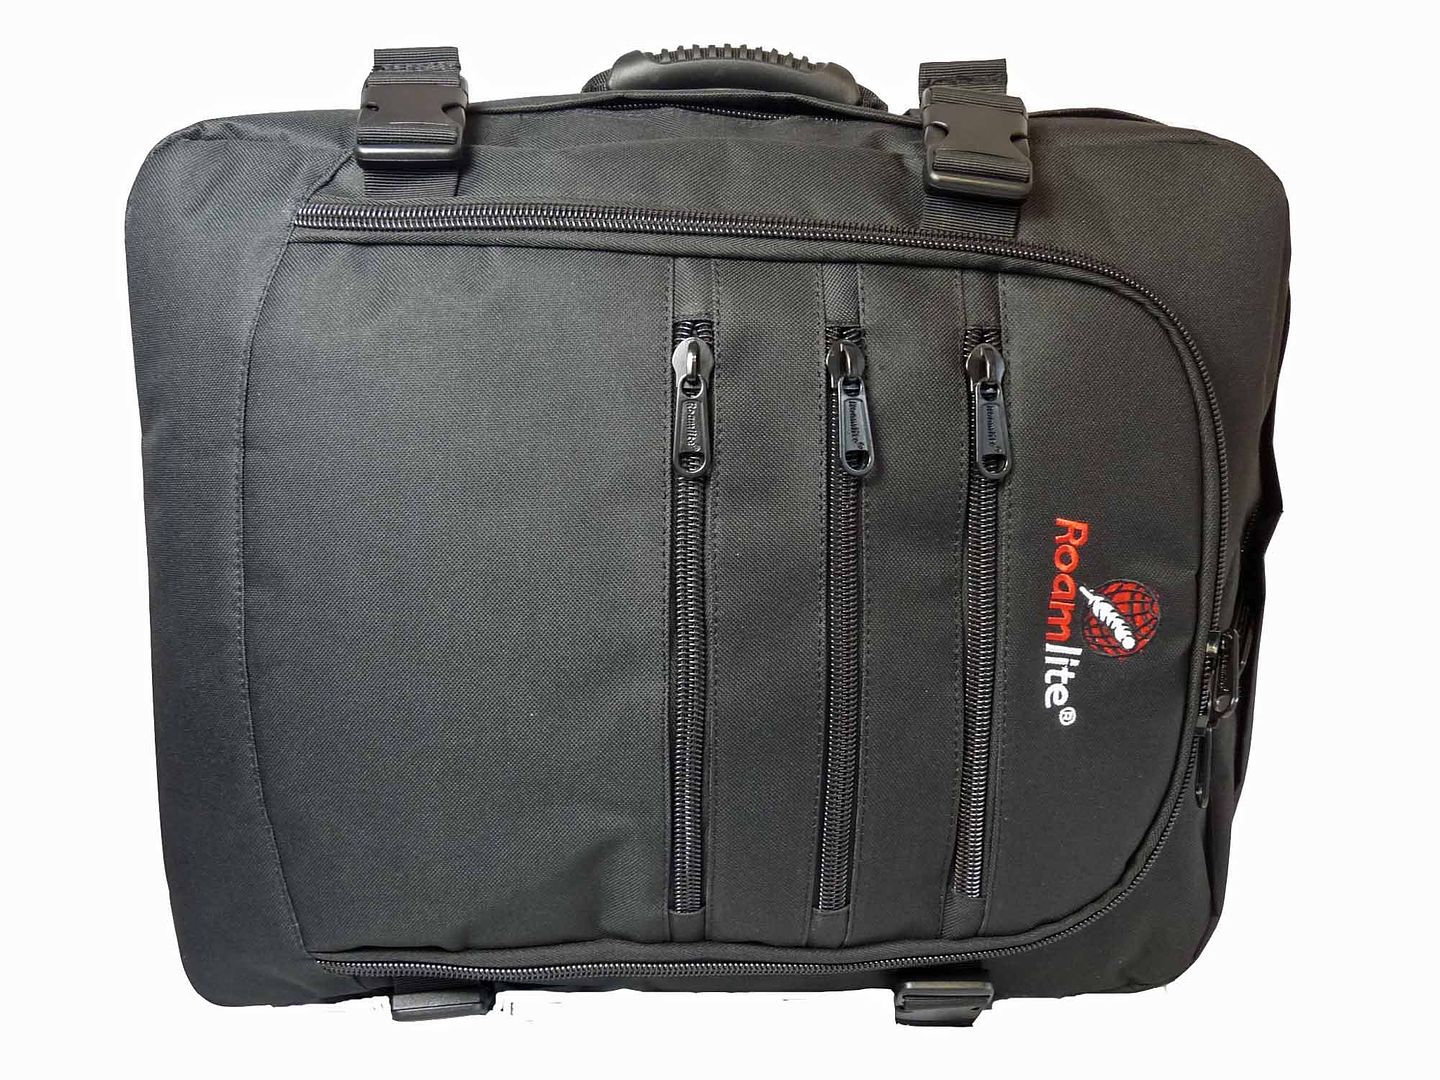 Cabin Baggage Max Size Hand Luggage Backpack Rucksack 50 40 20 Bag Bags RL42M | eBay